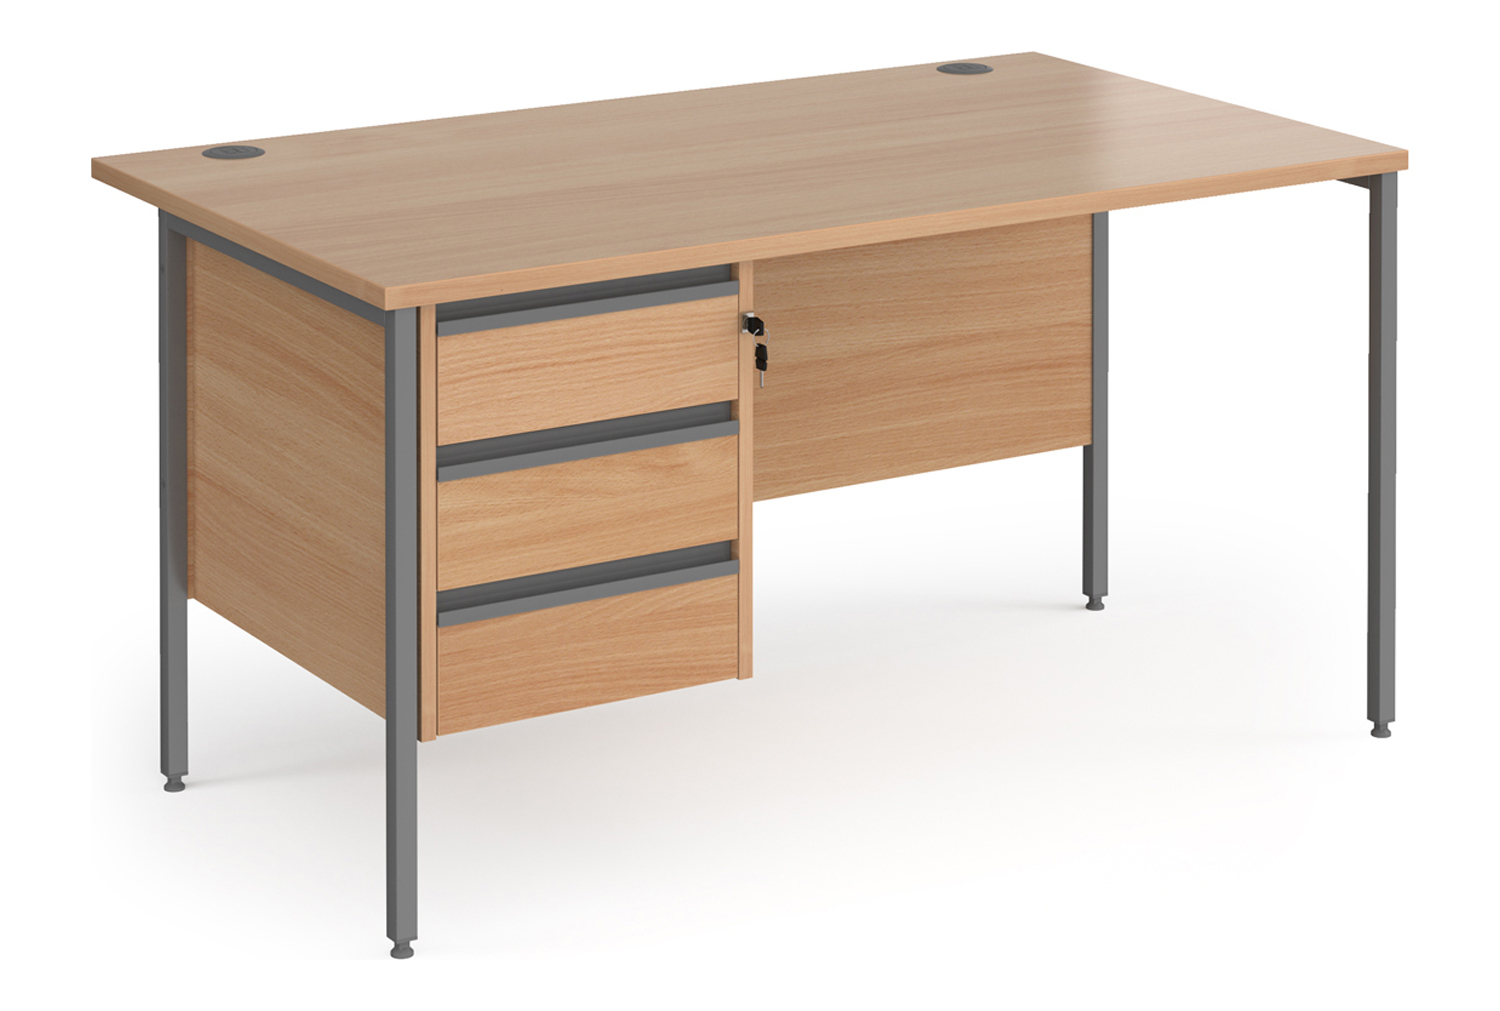 Value Line Classic+ Rectangular H-Leg Office Desk 3 Drawers (Graphite Leg), 140wx80dx73h (cm), Beech